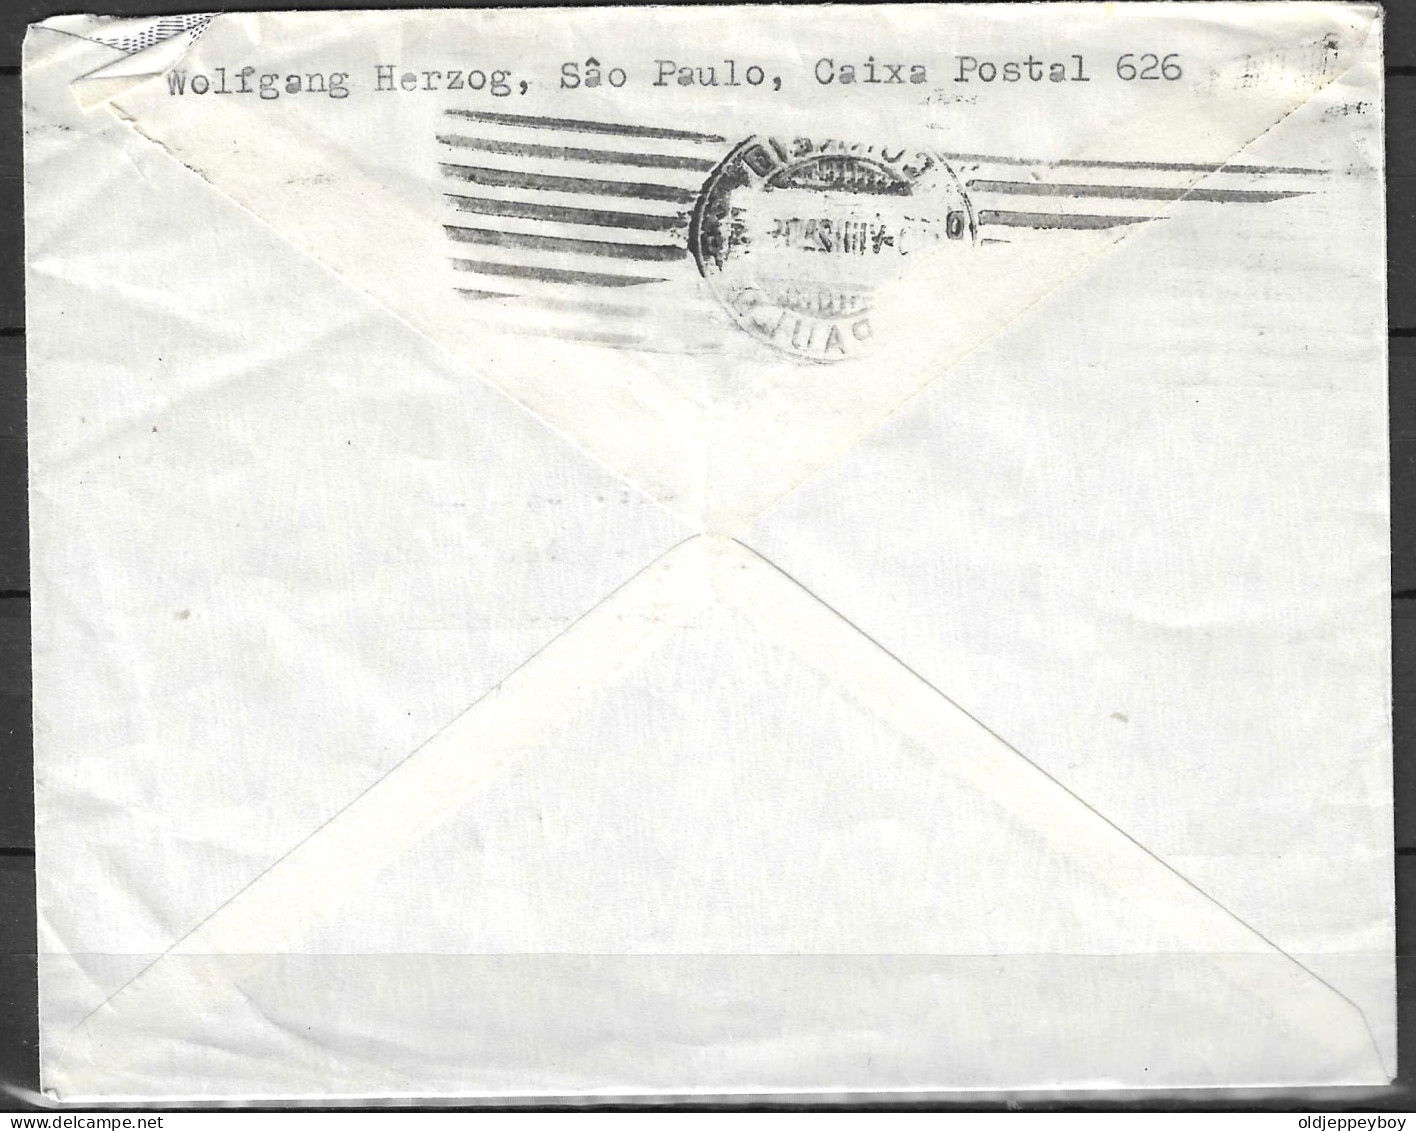 1953  Brazil Brasil Cover Envelope SÃO PAULO VIA AEREA  AIRMAIL  TO KANDERTAL  SUISSE Switzerland JUVENTUDE BATISTA - Briefe U. Dokumente